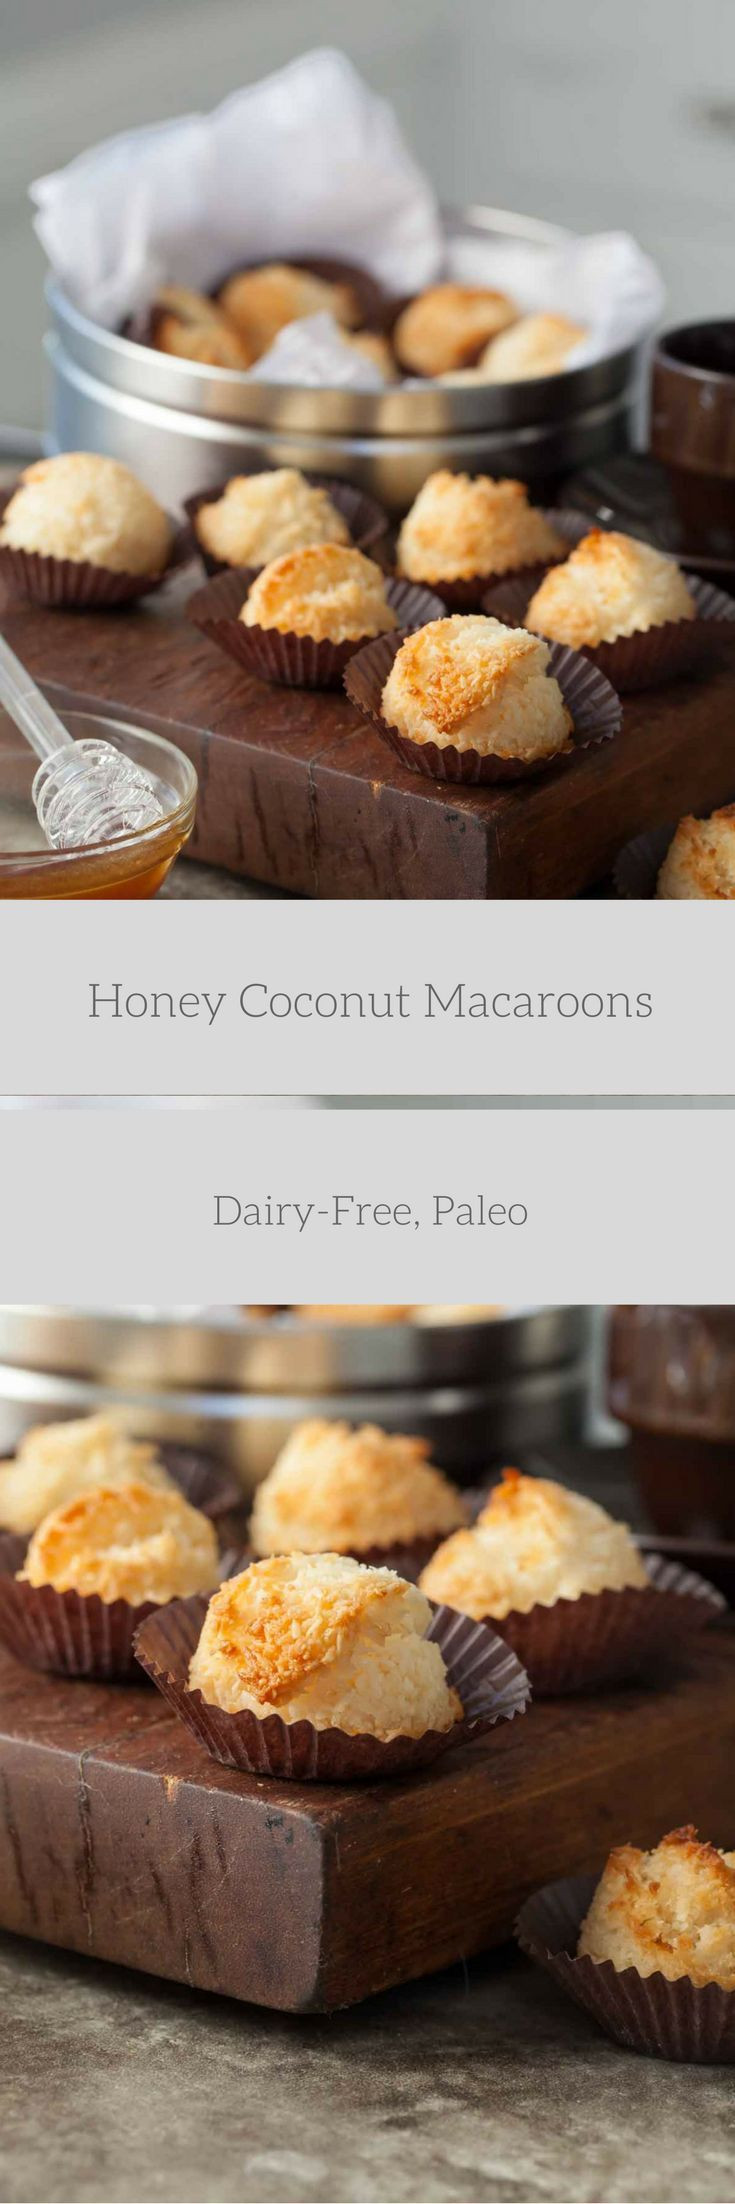 Coconut Macaroons Paleo
 Honey Coconut Macaroons Dairy Free Paleo